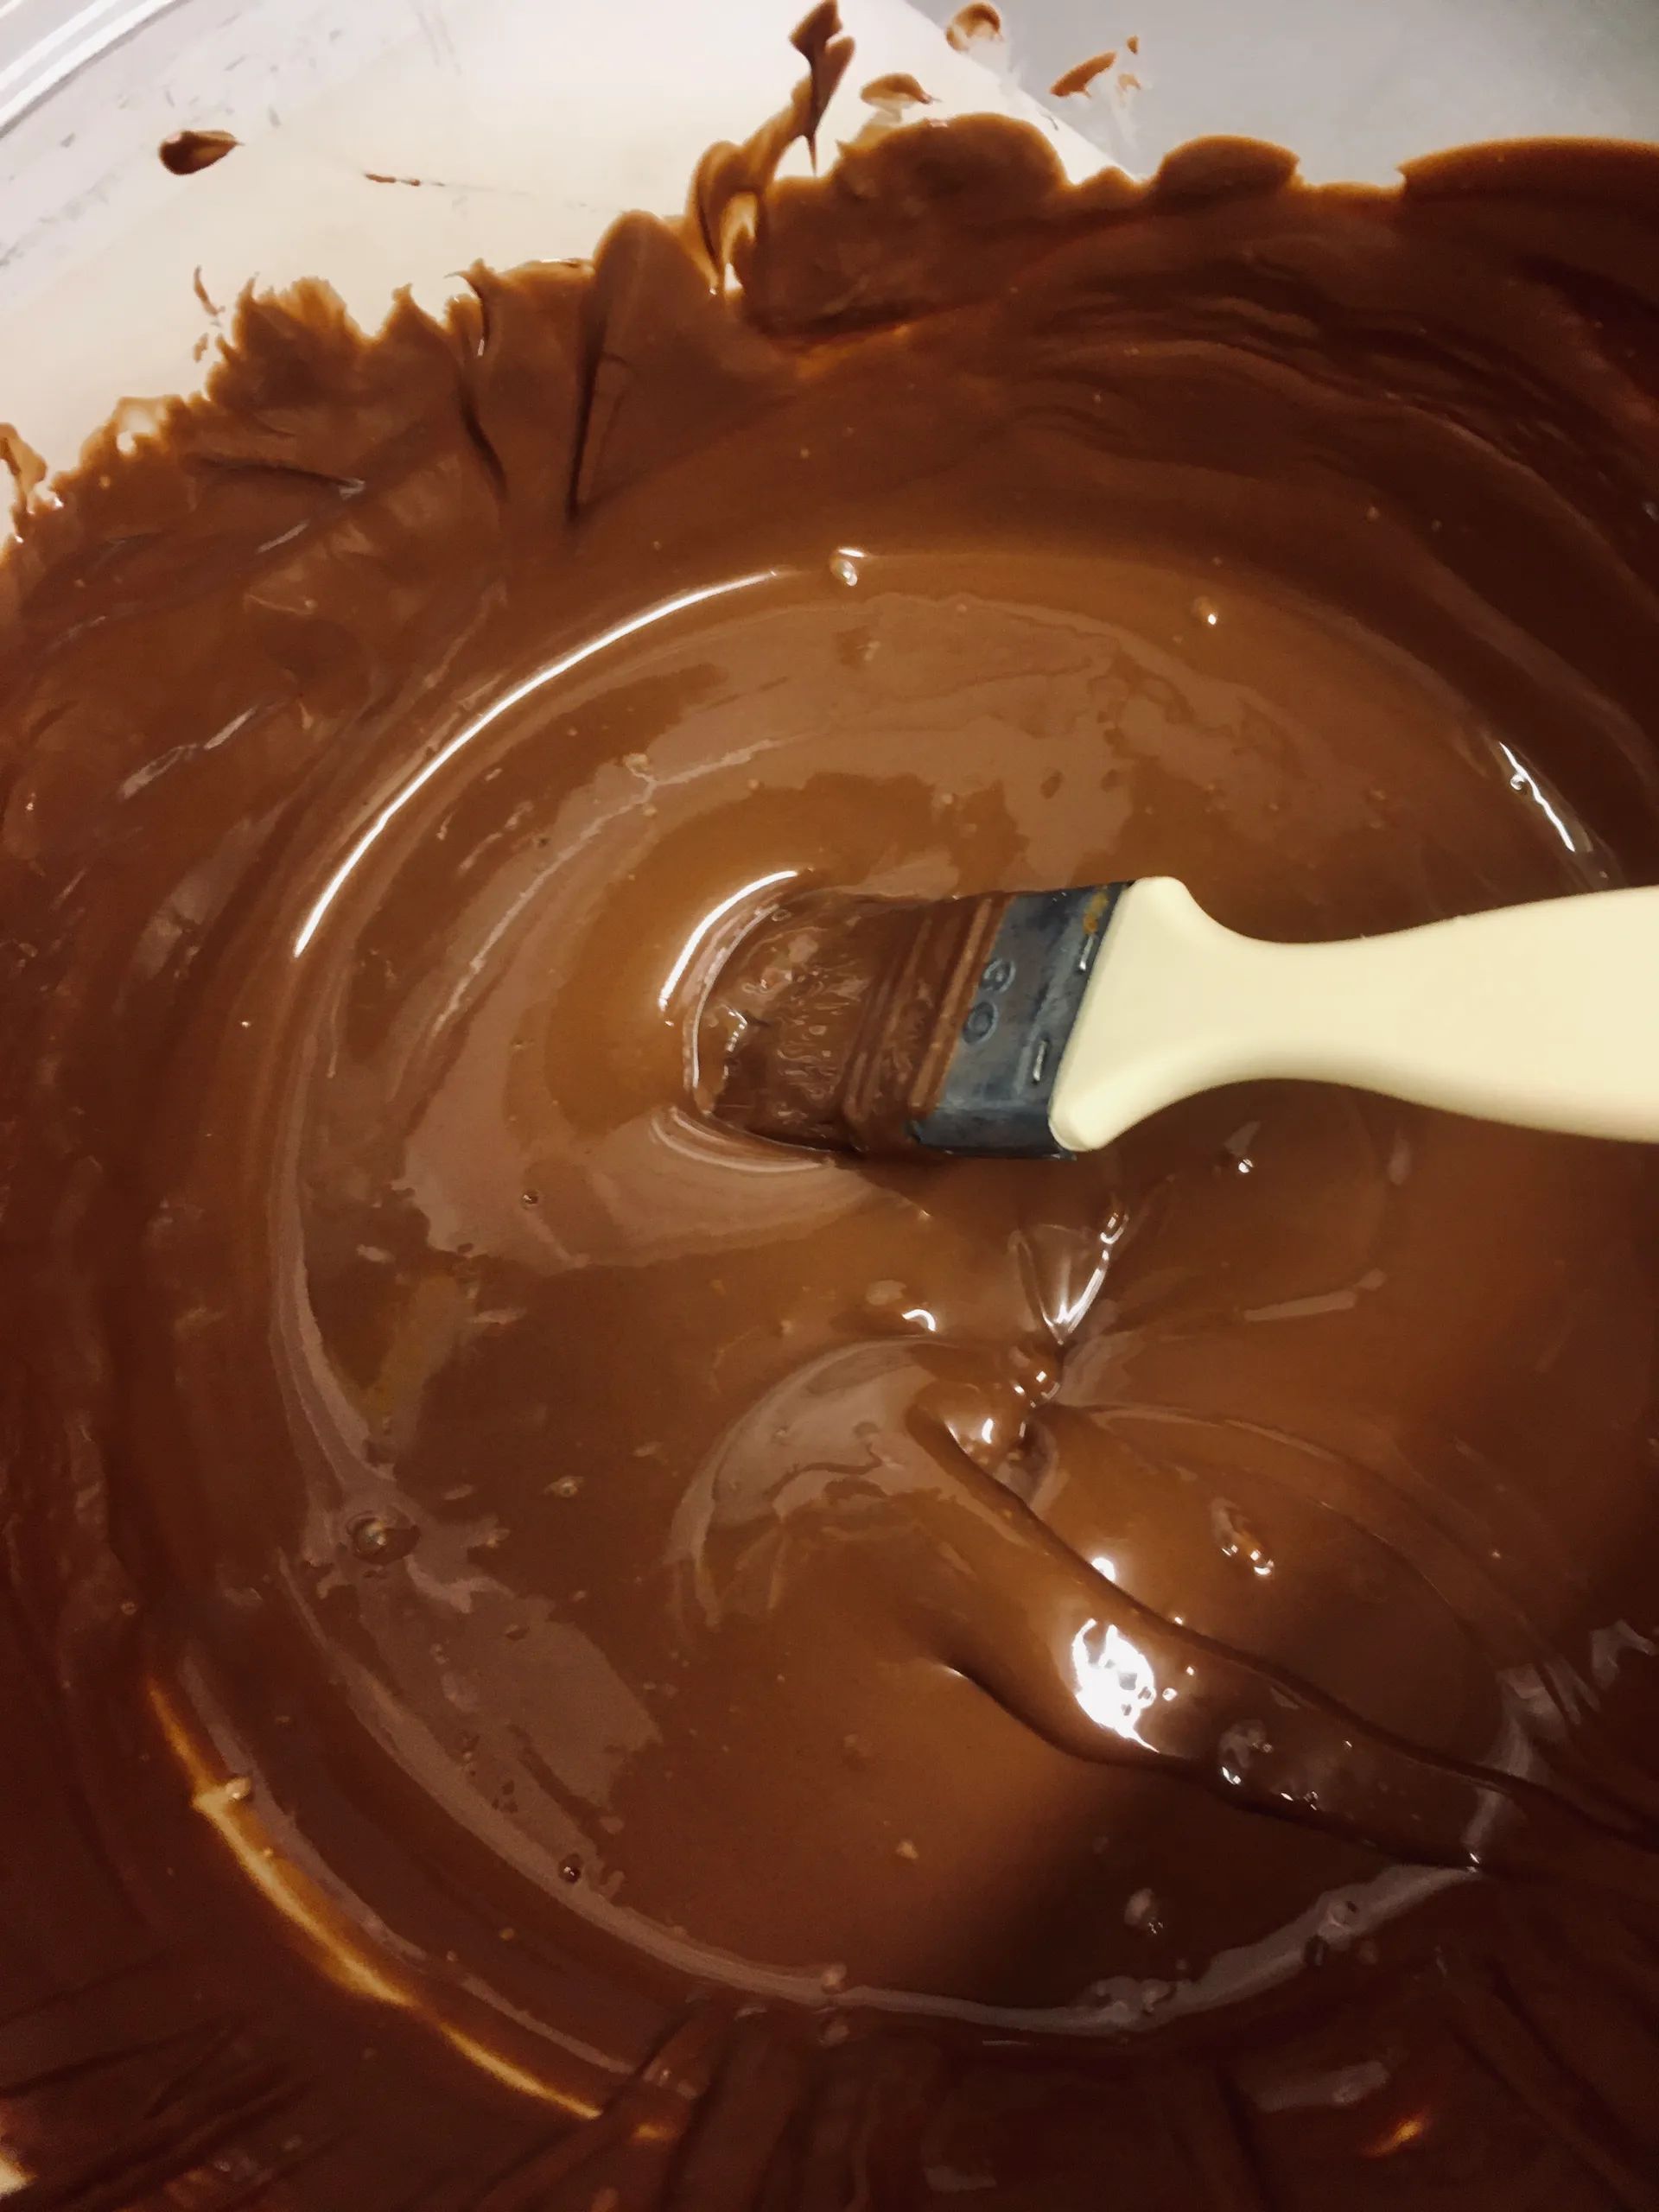 Preparation dome chocolat